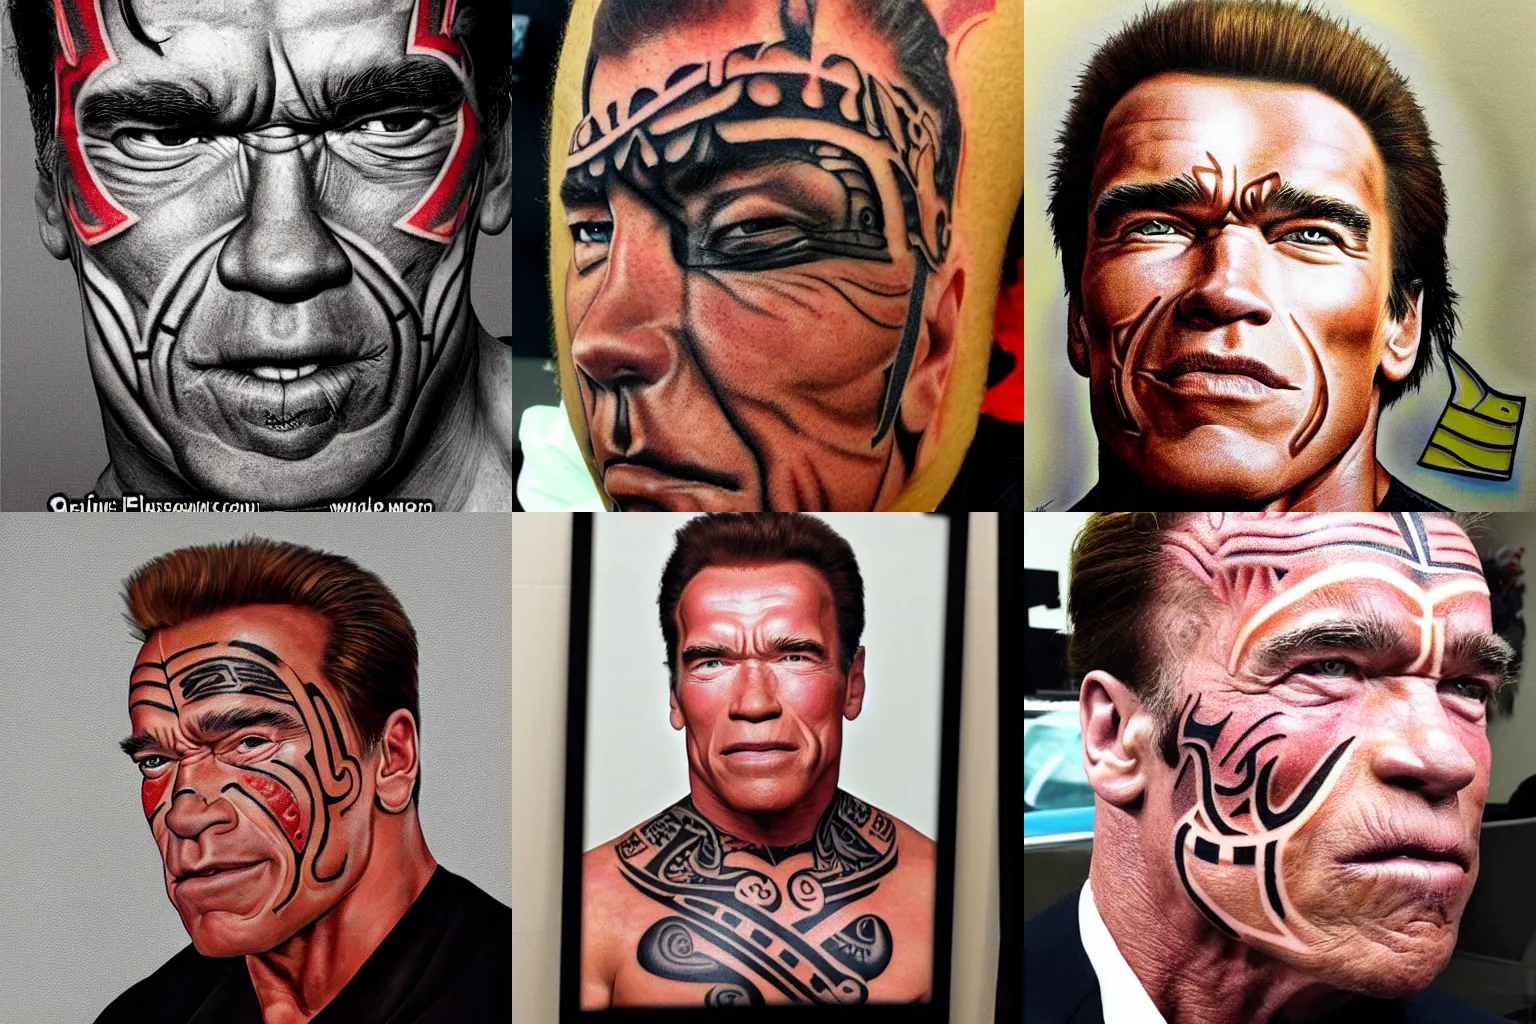 Prompt: arnold Schwarzenegger portrait with maori face tattoo